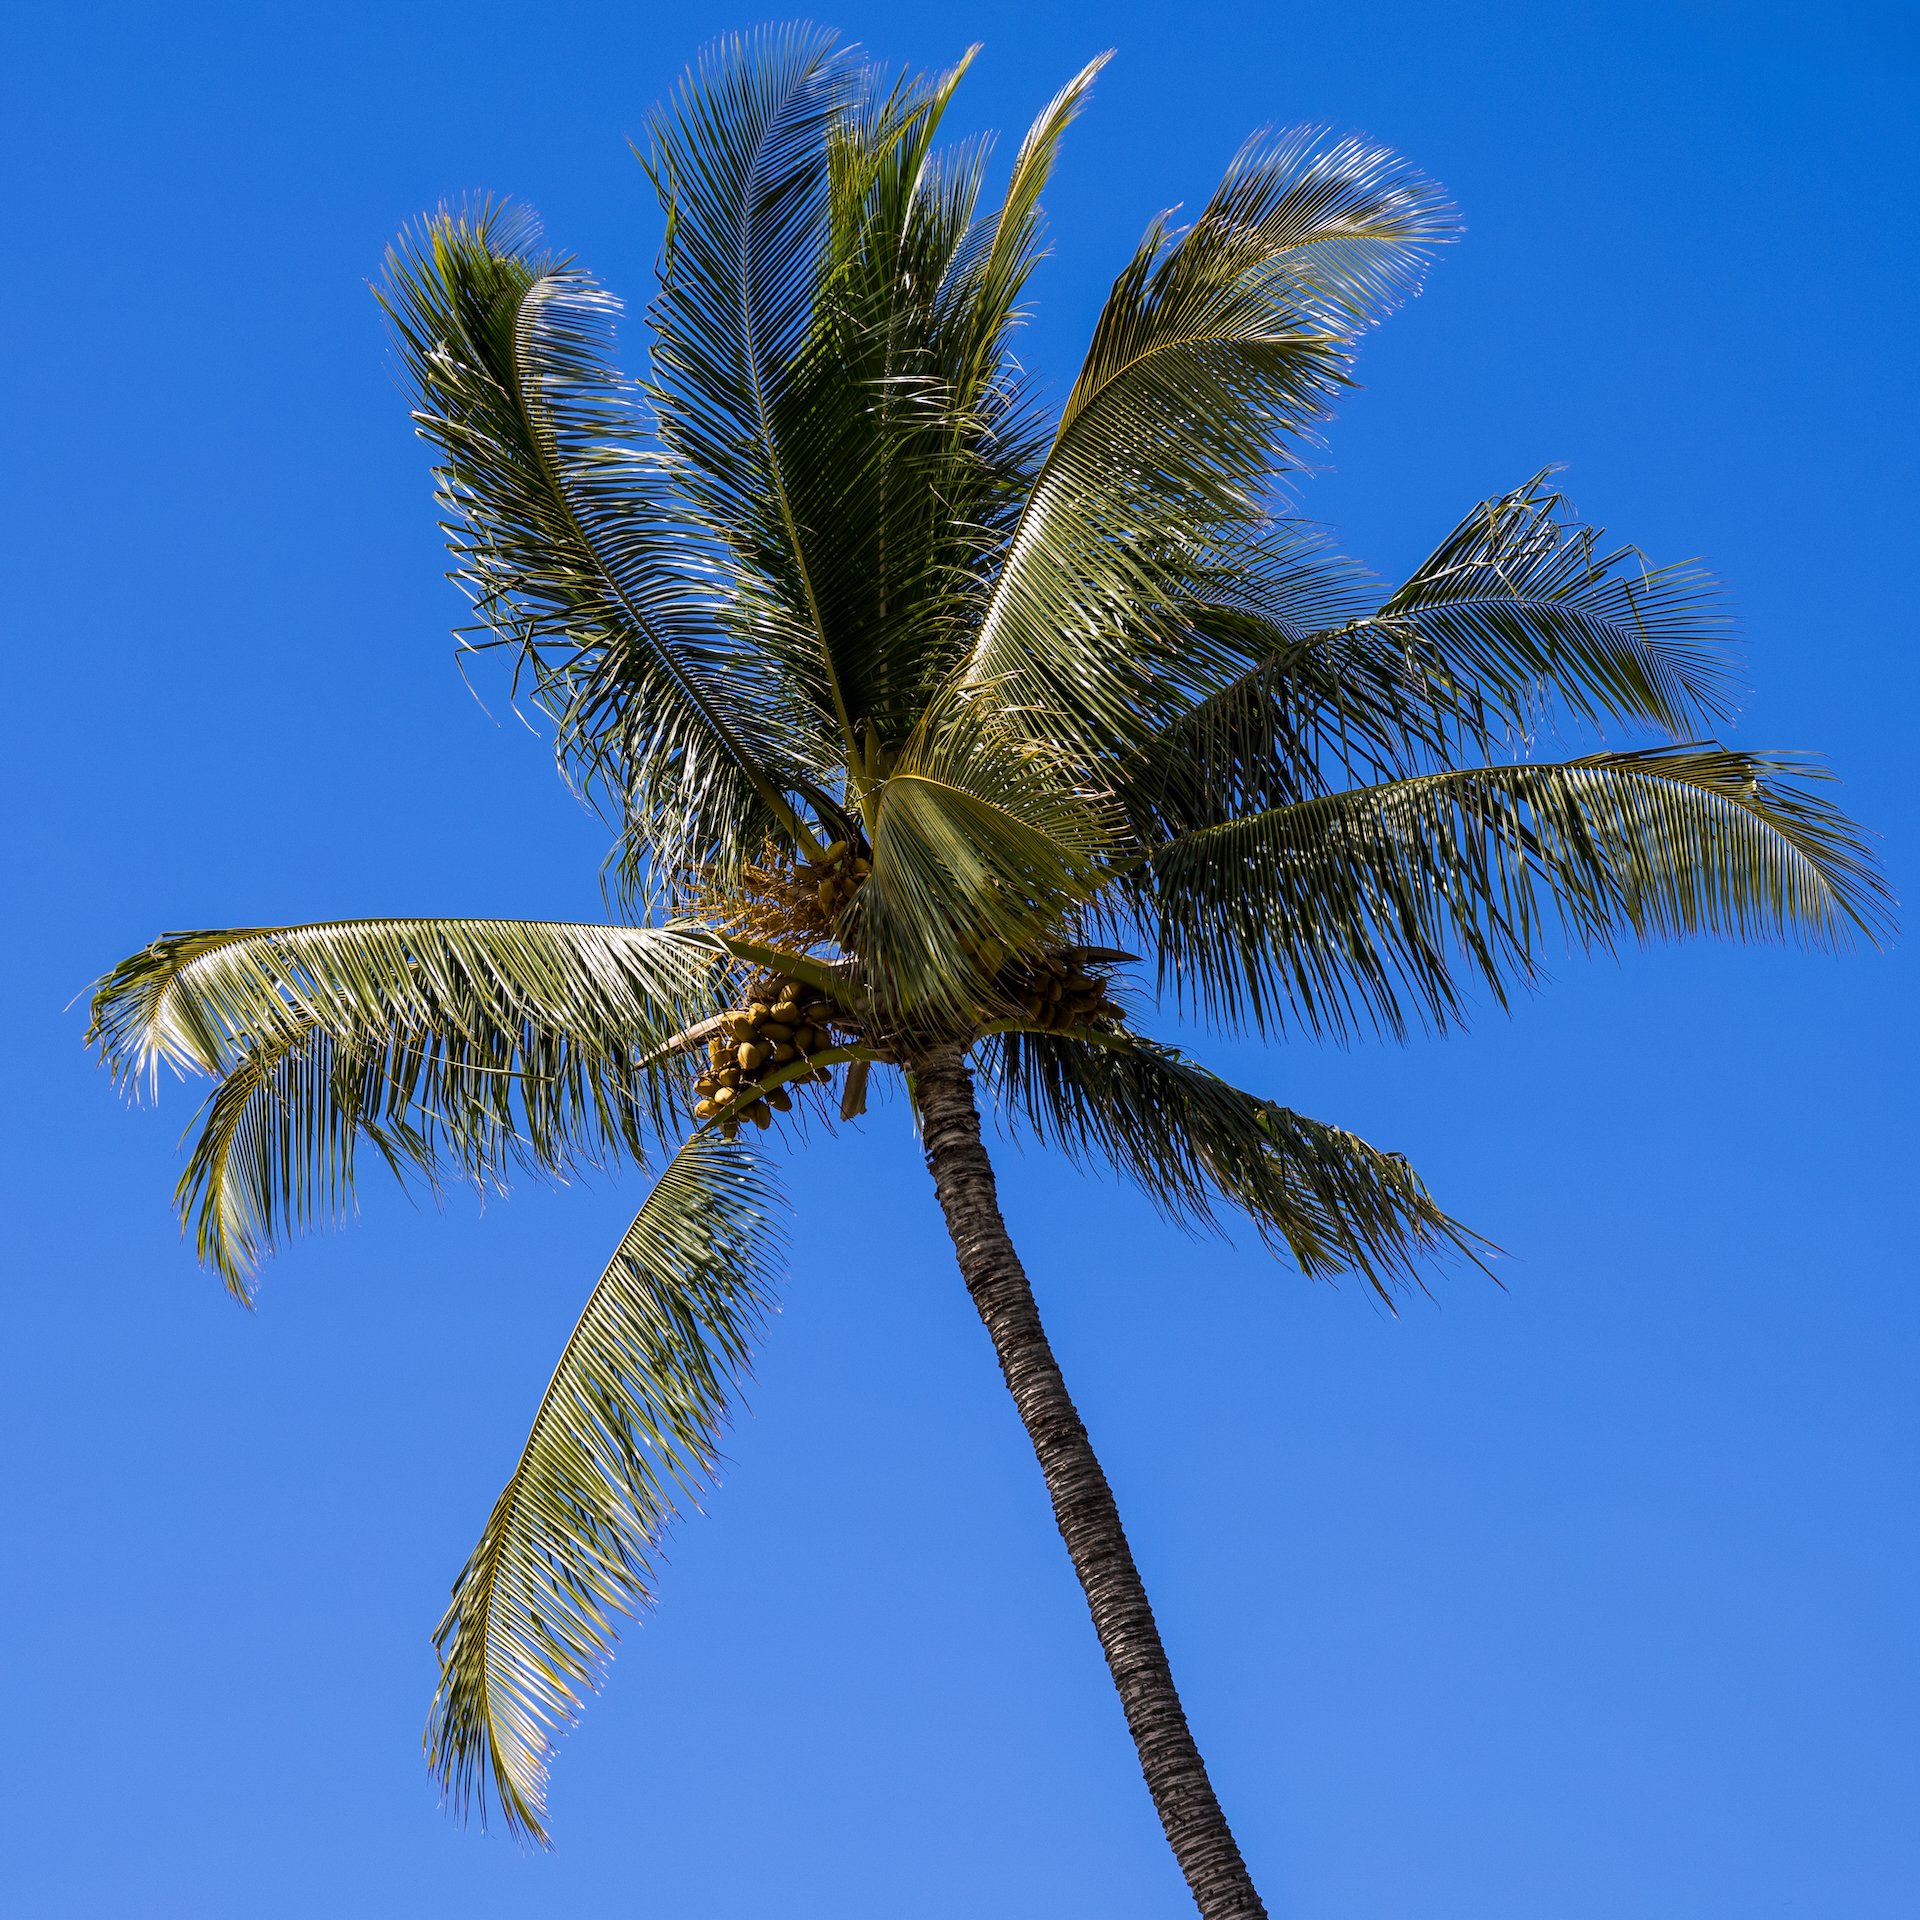  Palm trees on the beach. 